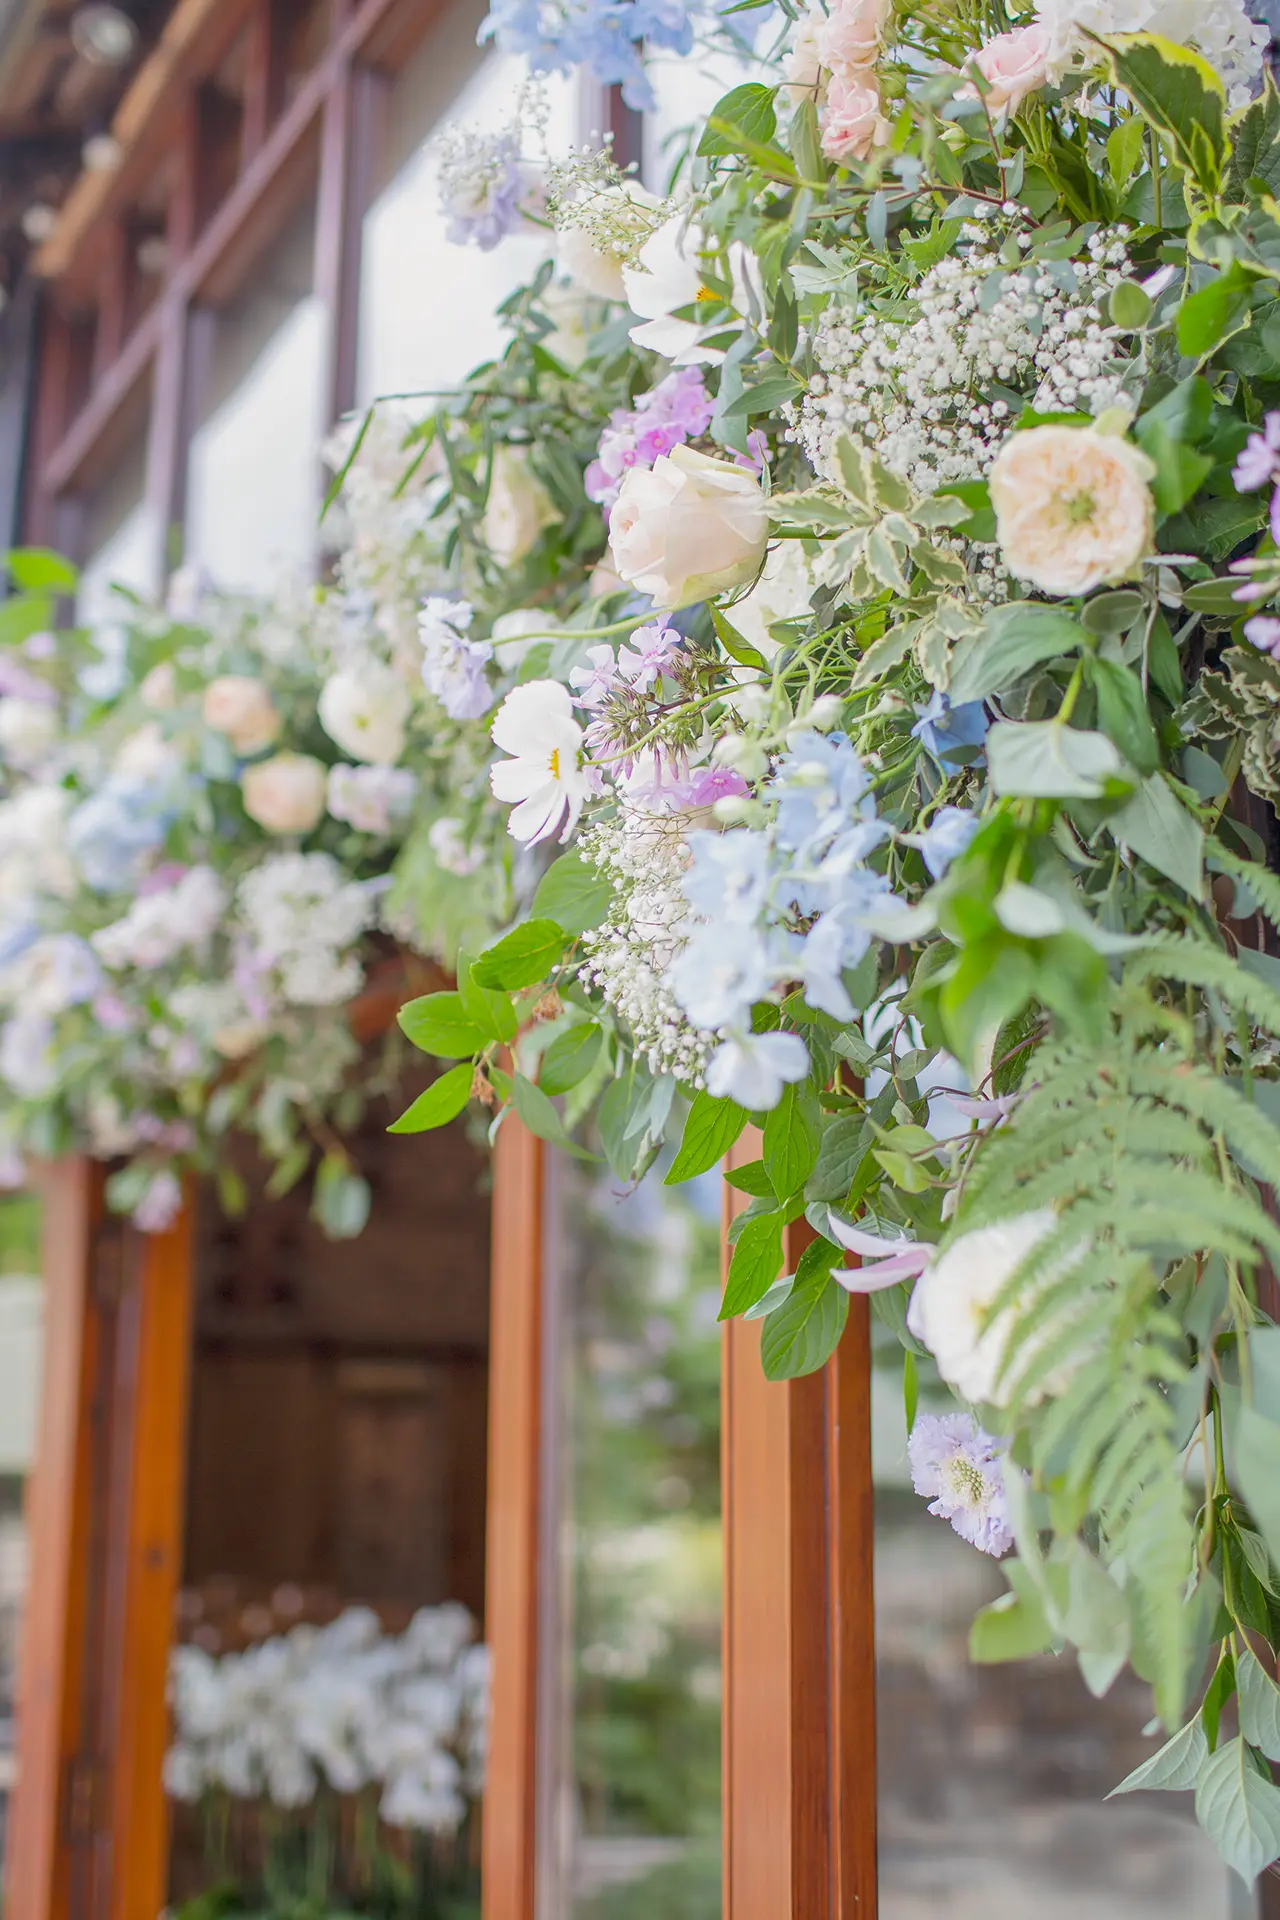 upwaltham-barns-wedding-gallery-ceremonies-flowers-cotton-candy